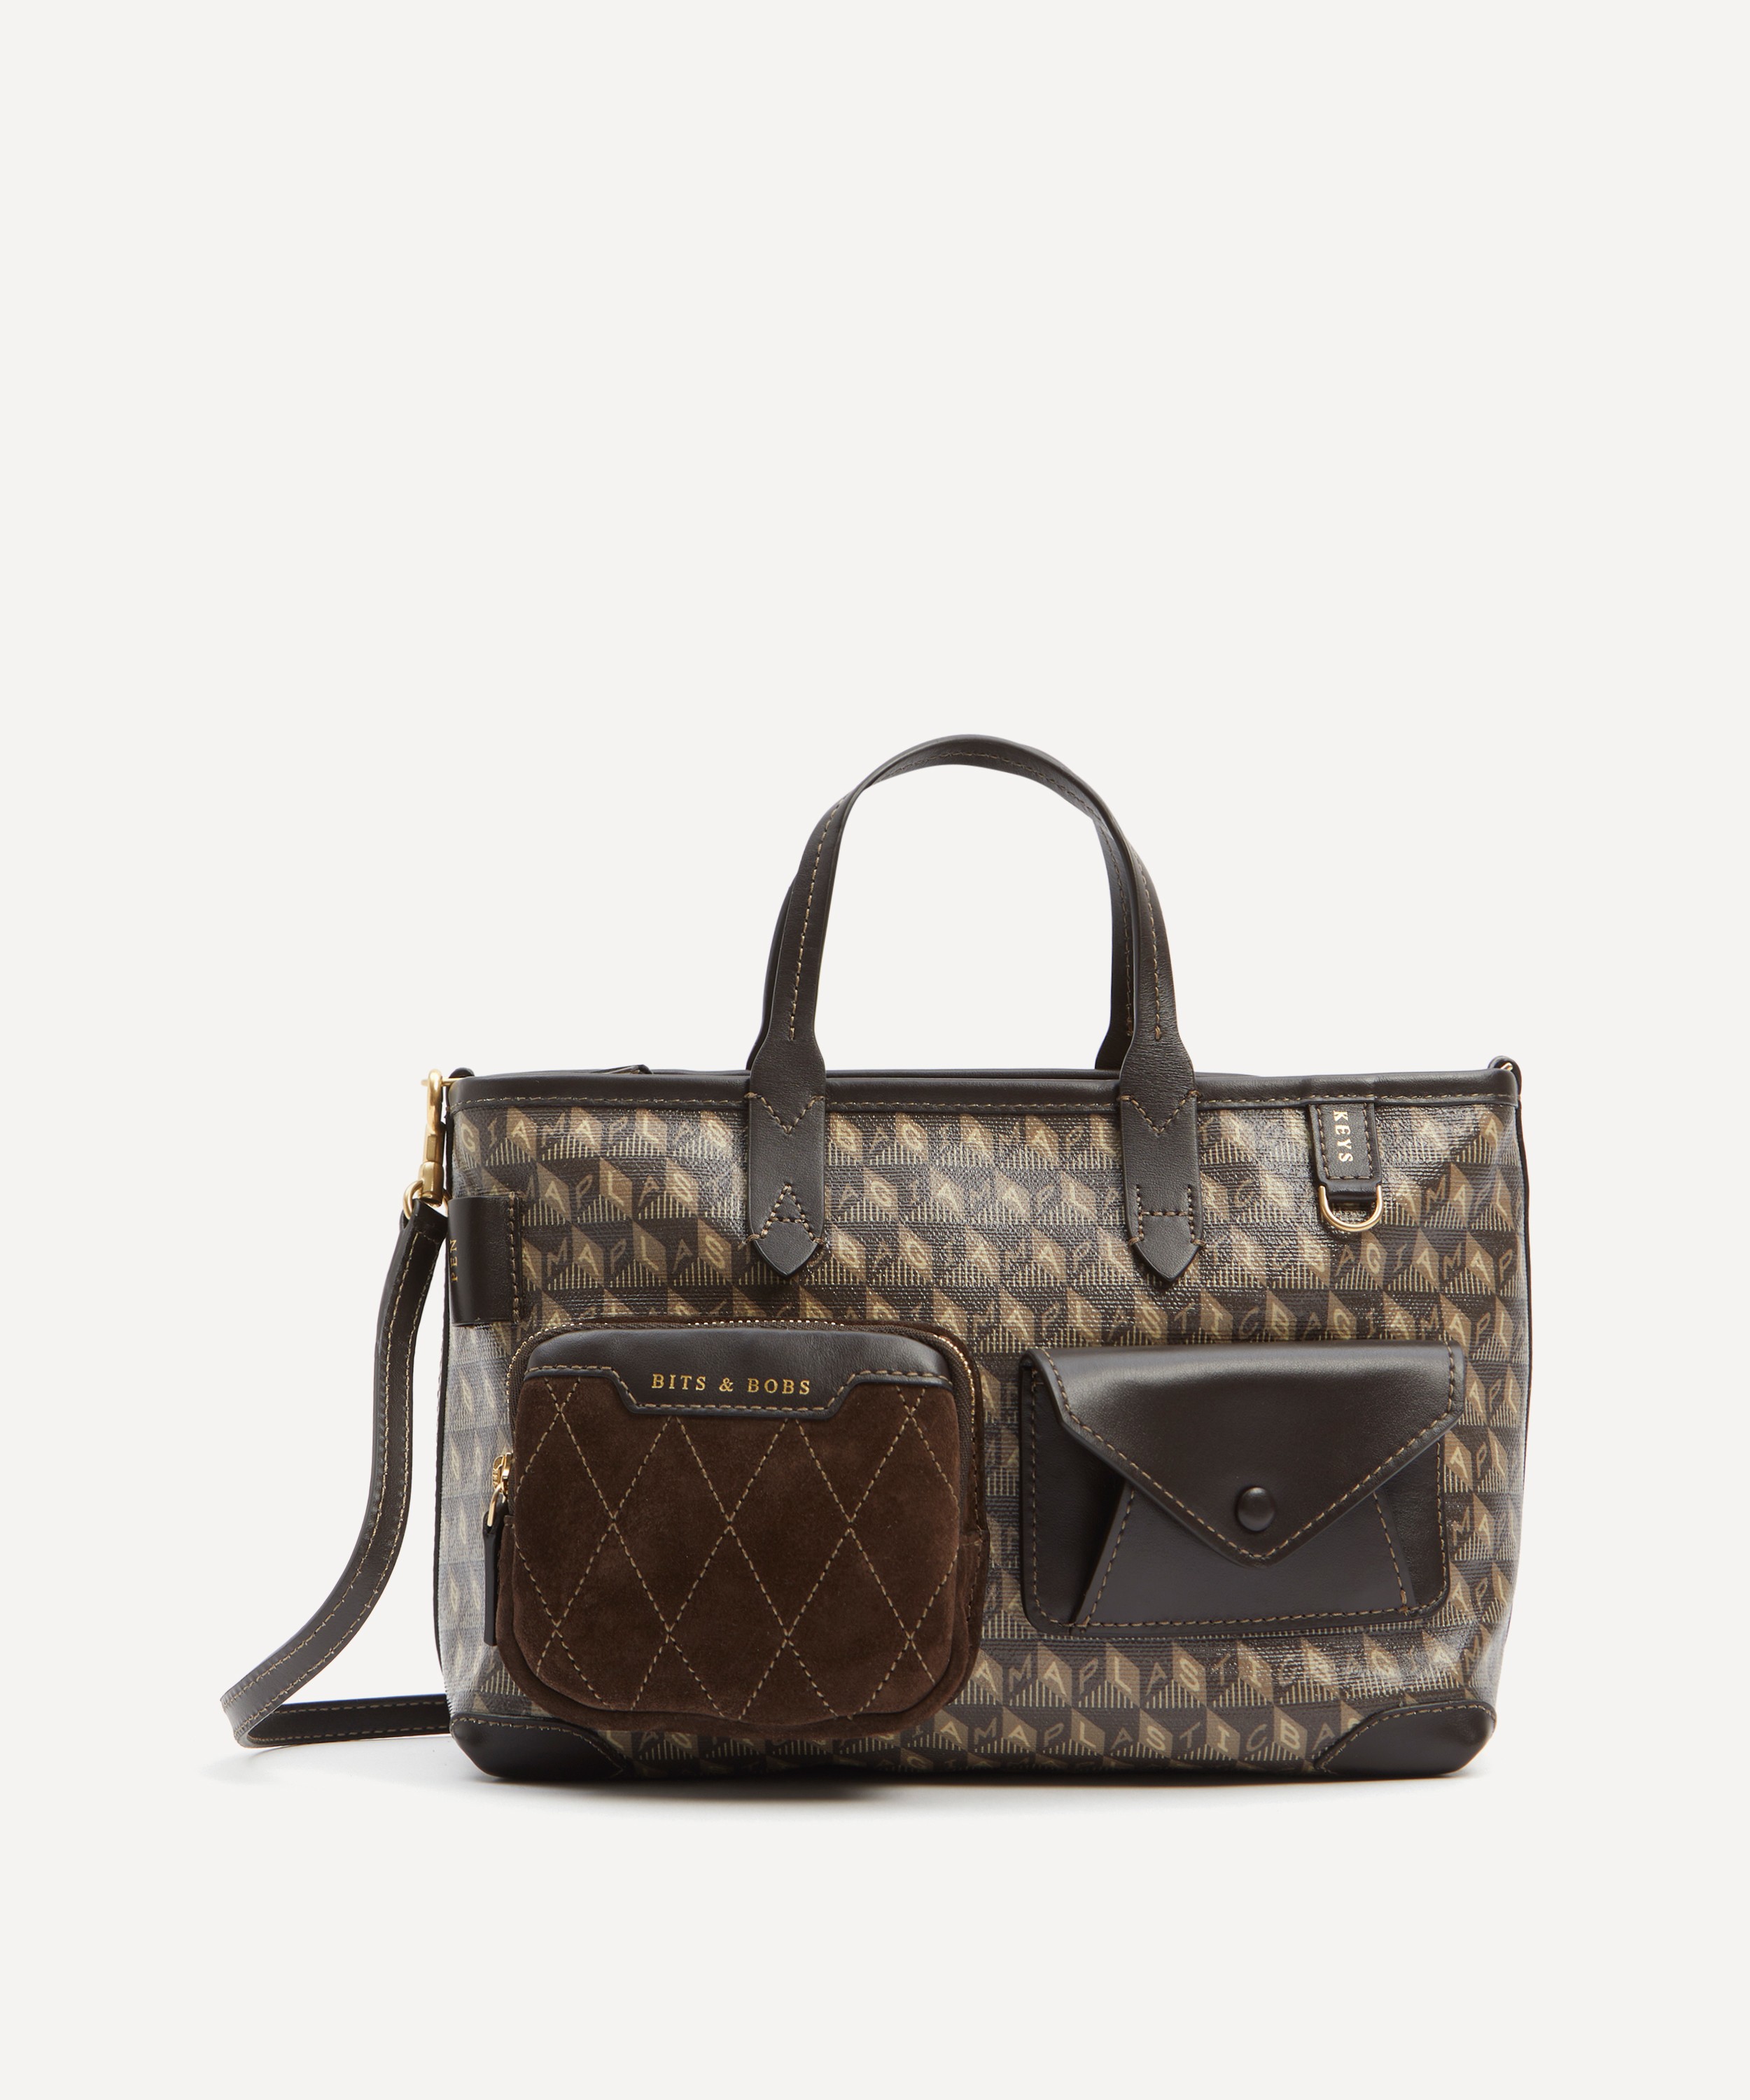 Louis Vuitton Launches XS-Sized Versions of Its Iconic Handbags  Louis  vuitton mens bag, Bags designer fashion, Mens designer bag